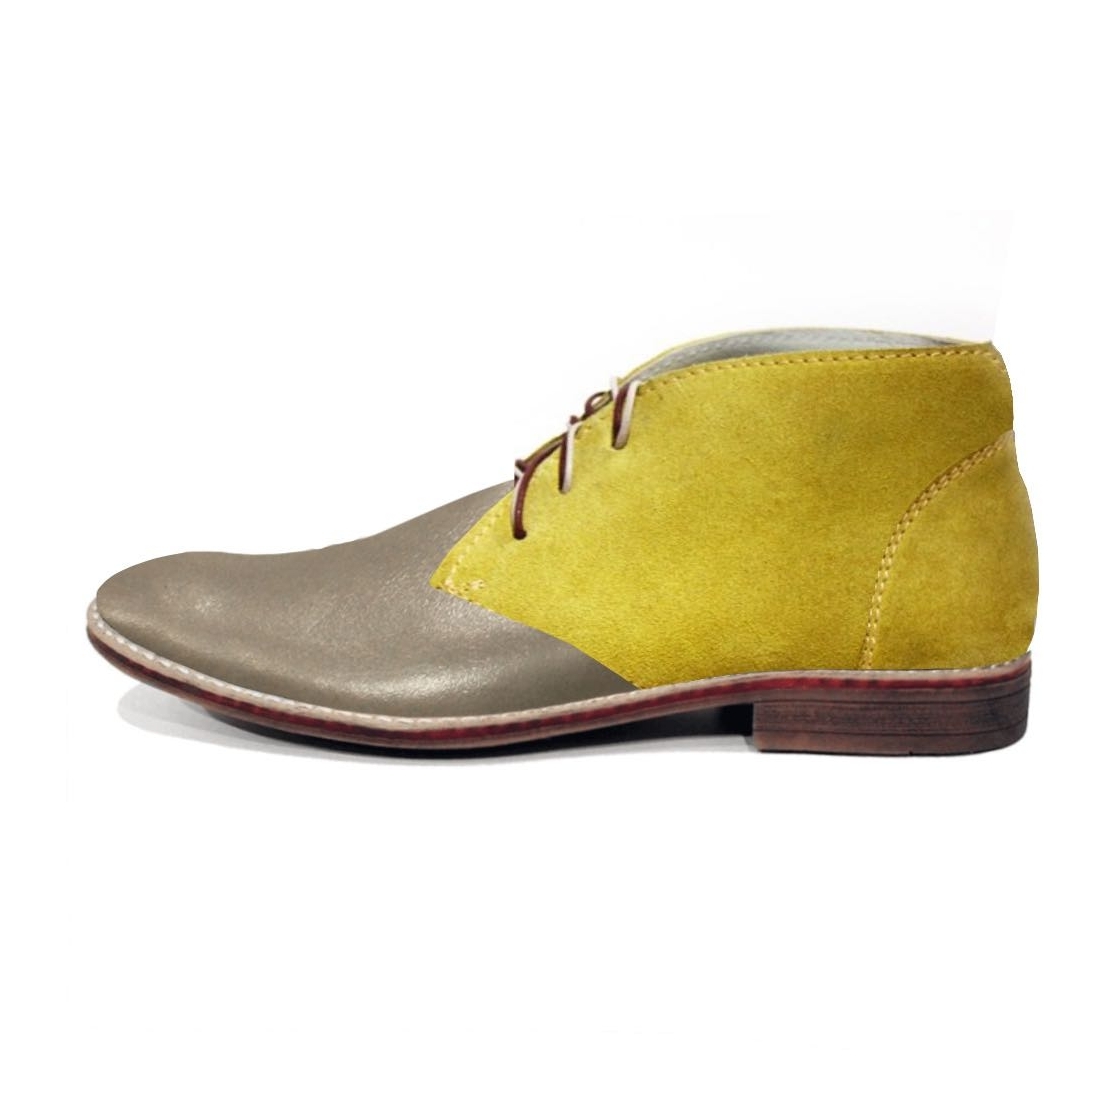 Modello Terrano - Chukka Boots - Handmade Colorful Italian Leather Shoes